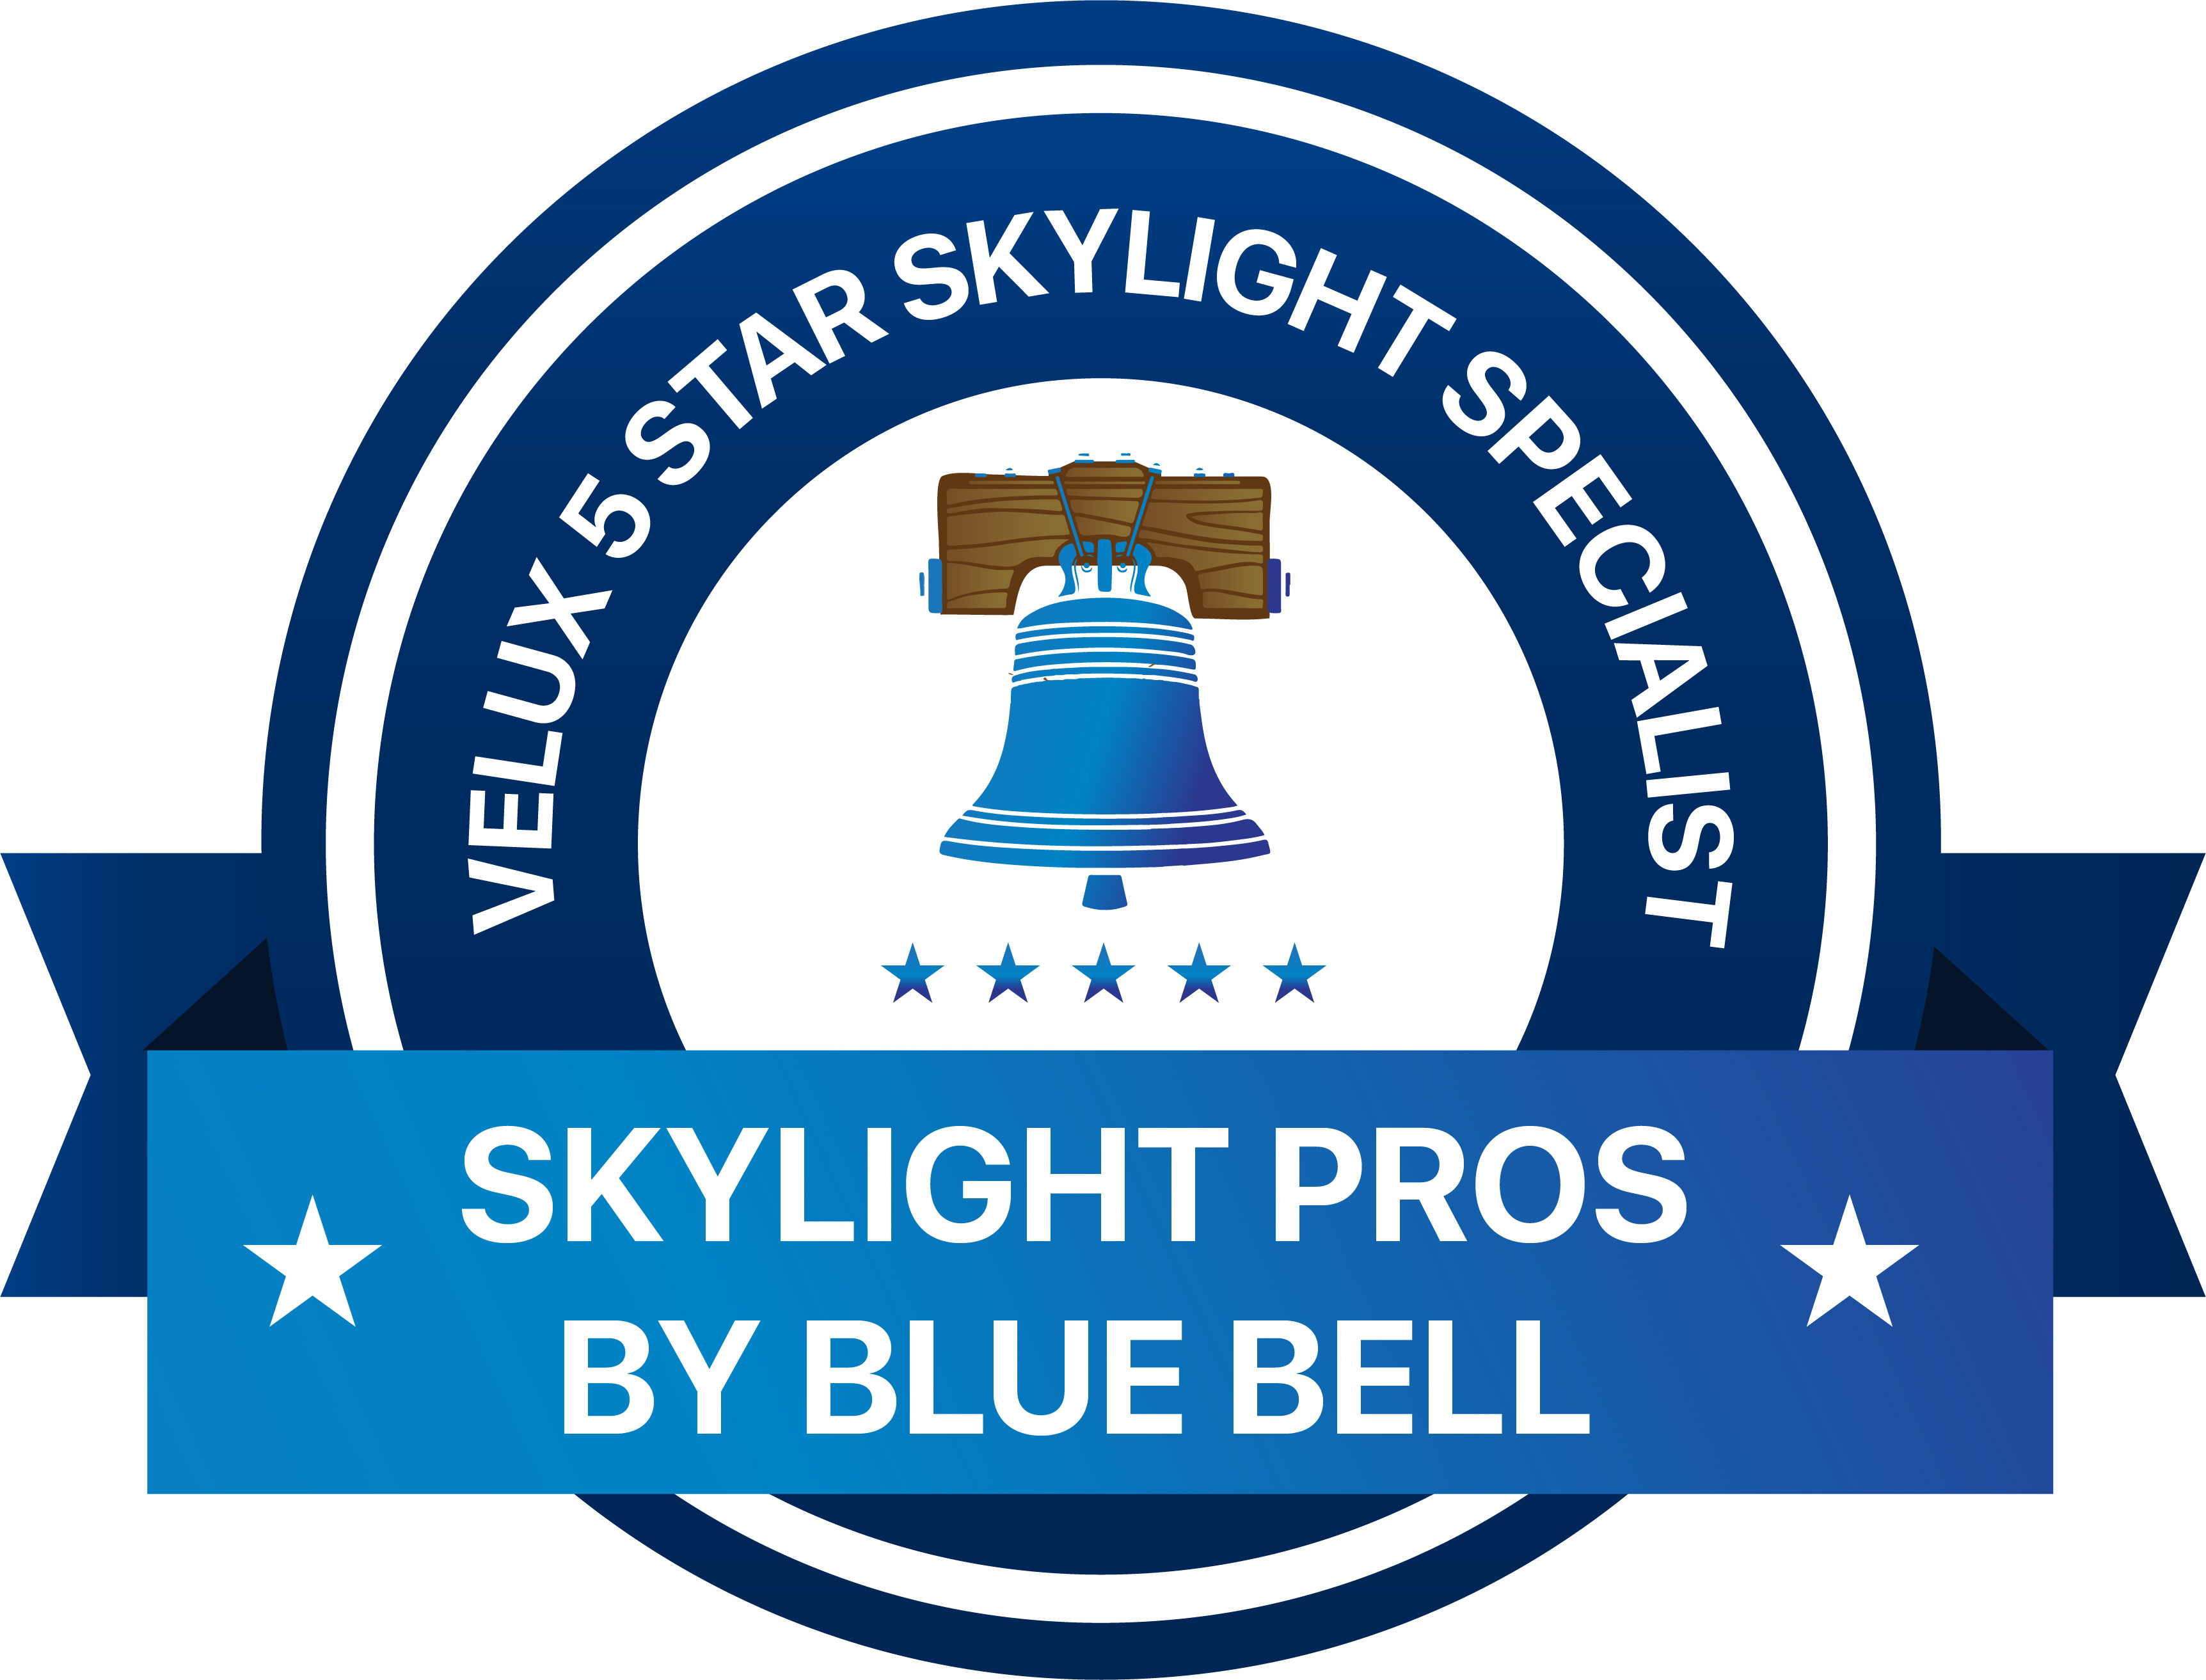 Skylight Pros by Blue Bell logo